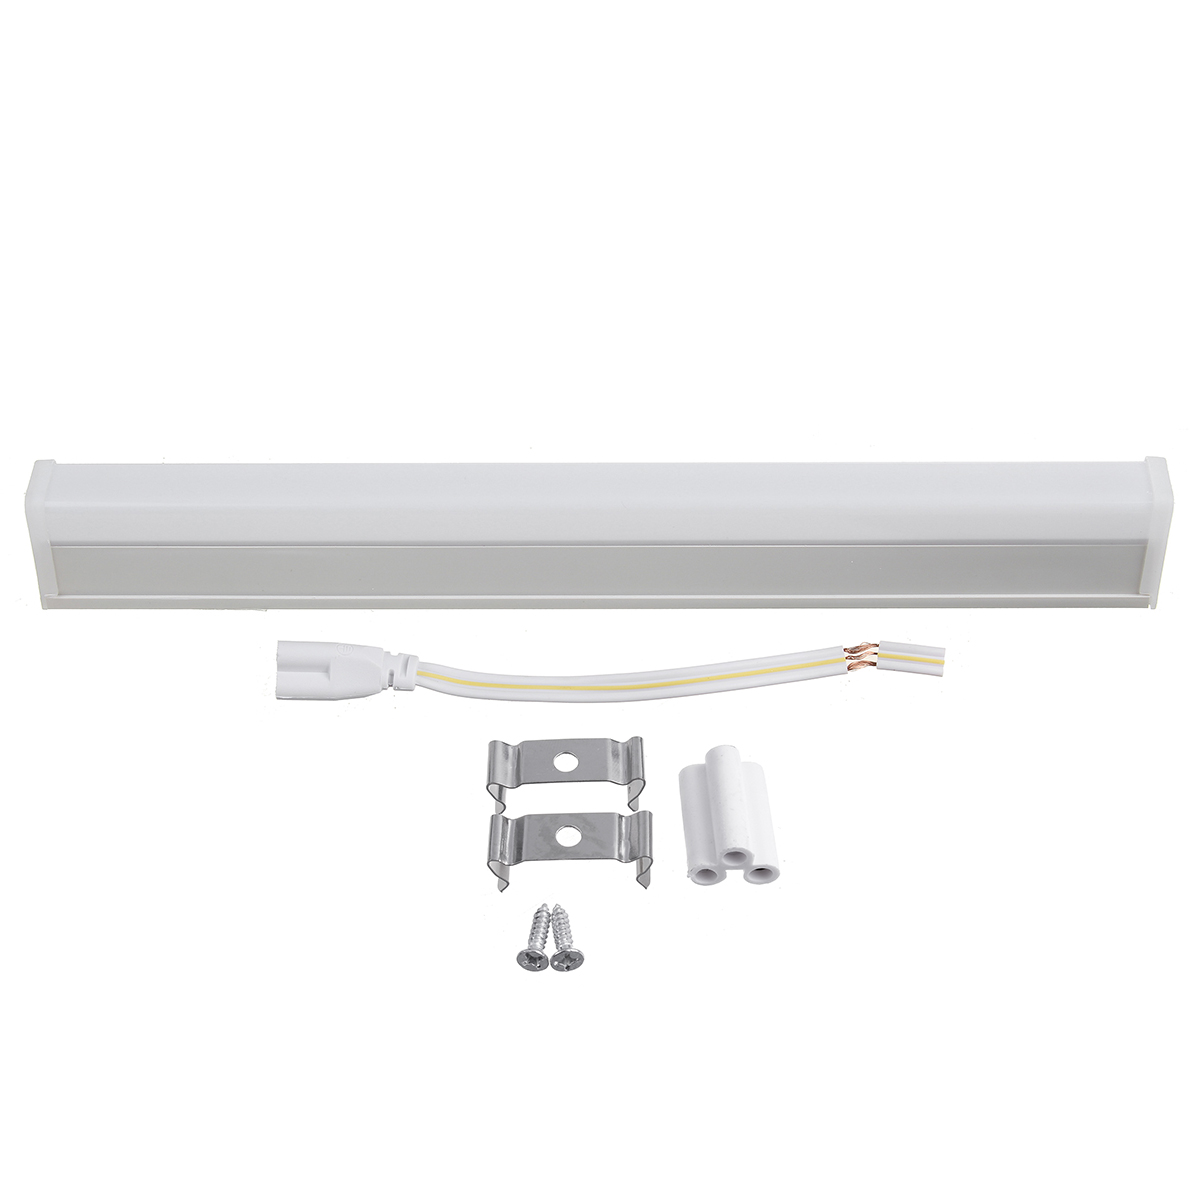 Fluorescent-Tube-Cabinet-Undershelf-LED-Light-Tube-Bulb-Lamp-Kitchen-Indore-Home-1808104-12